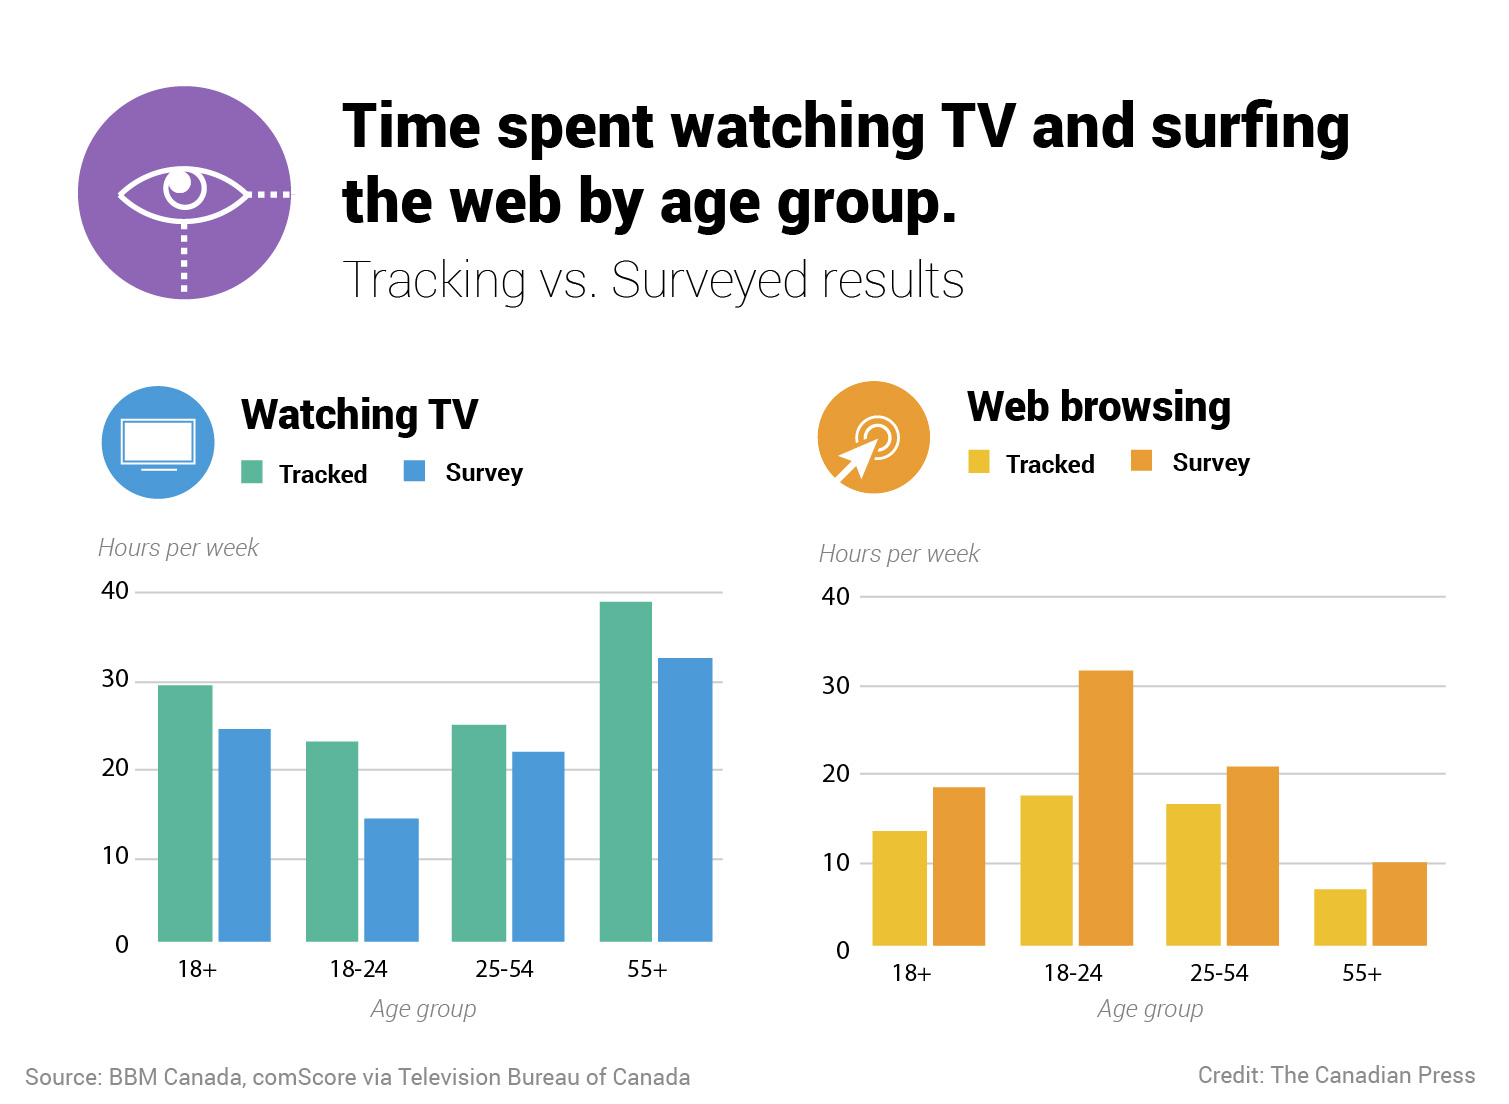 Time spent web/TV